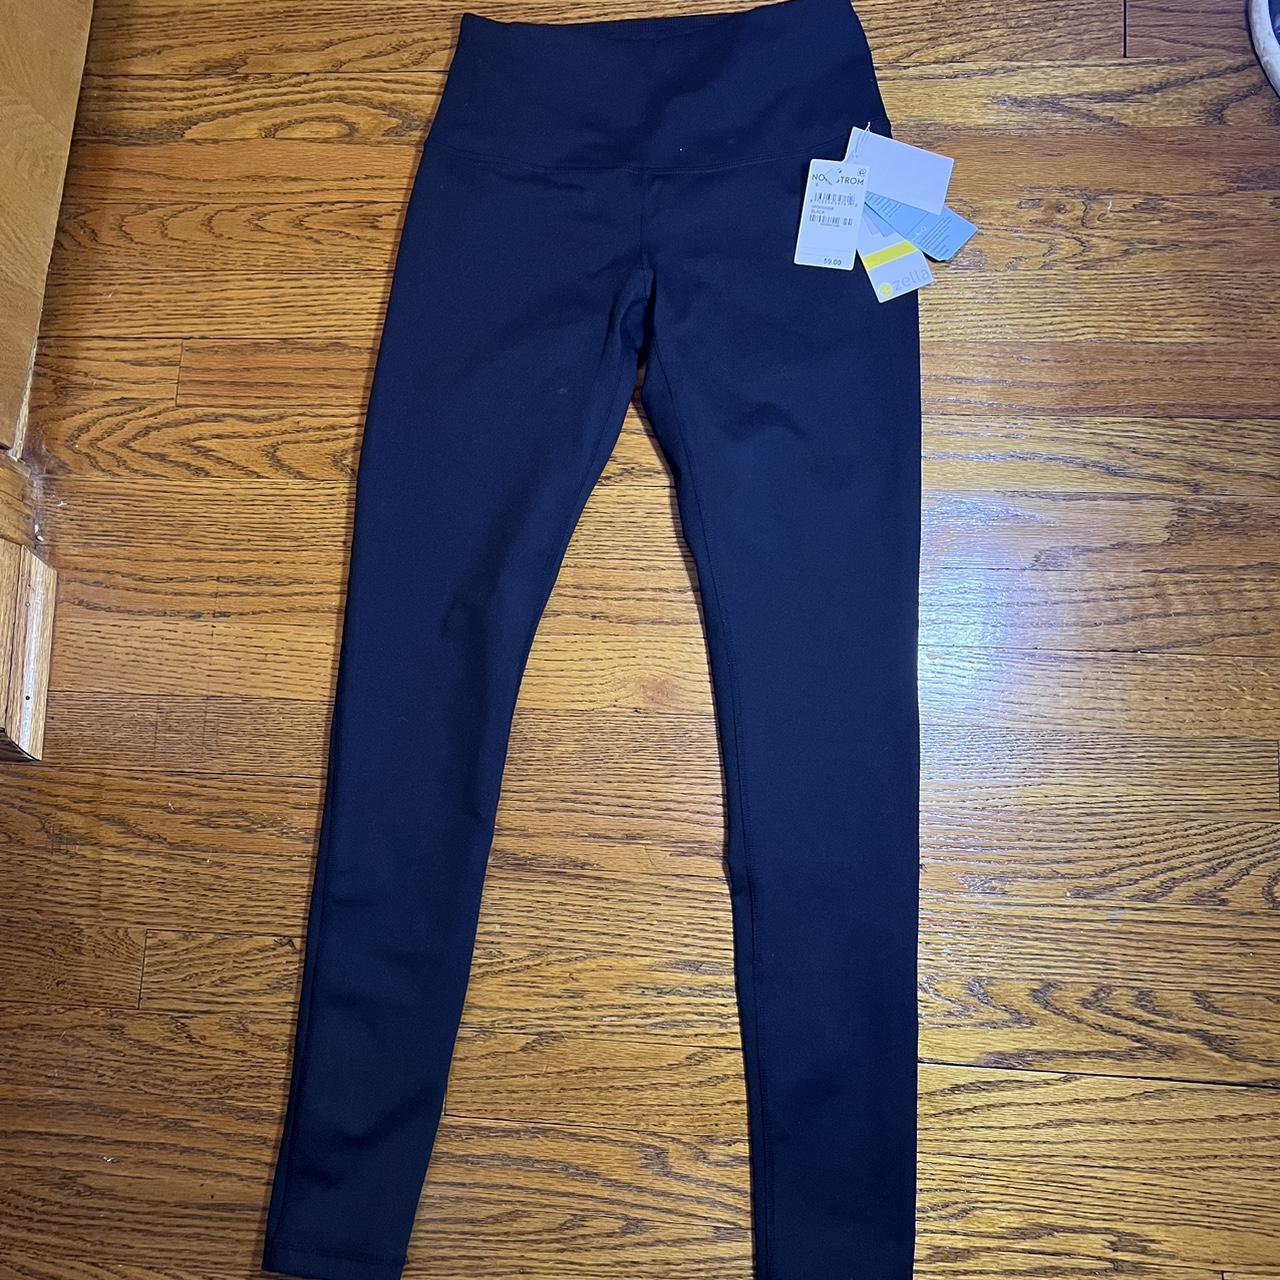 Zella black full length leggings new with tags